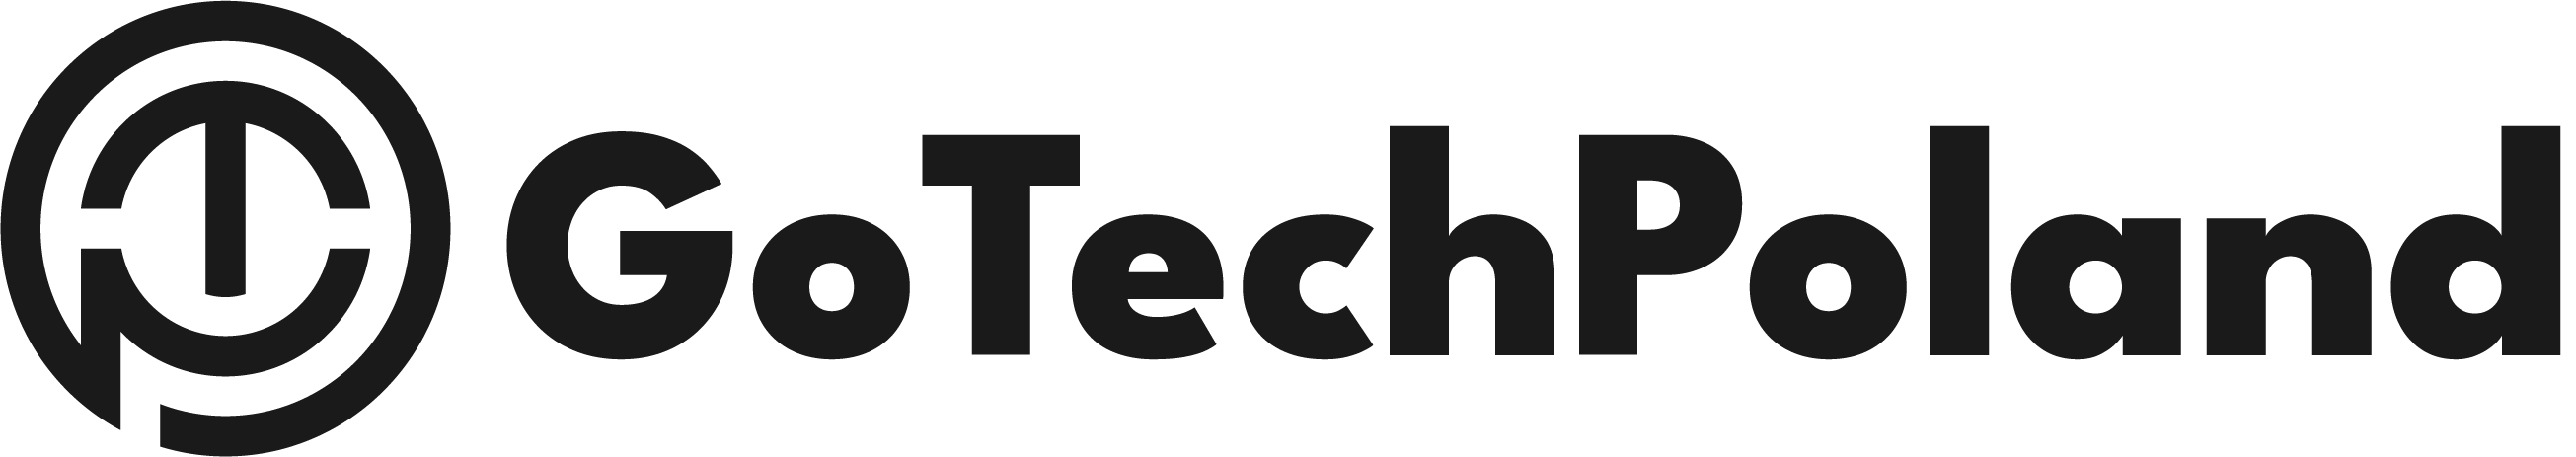 GoTechIcon_logotype_mark